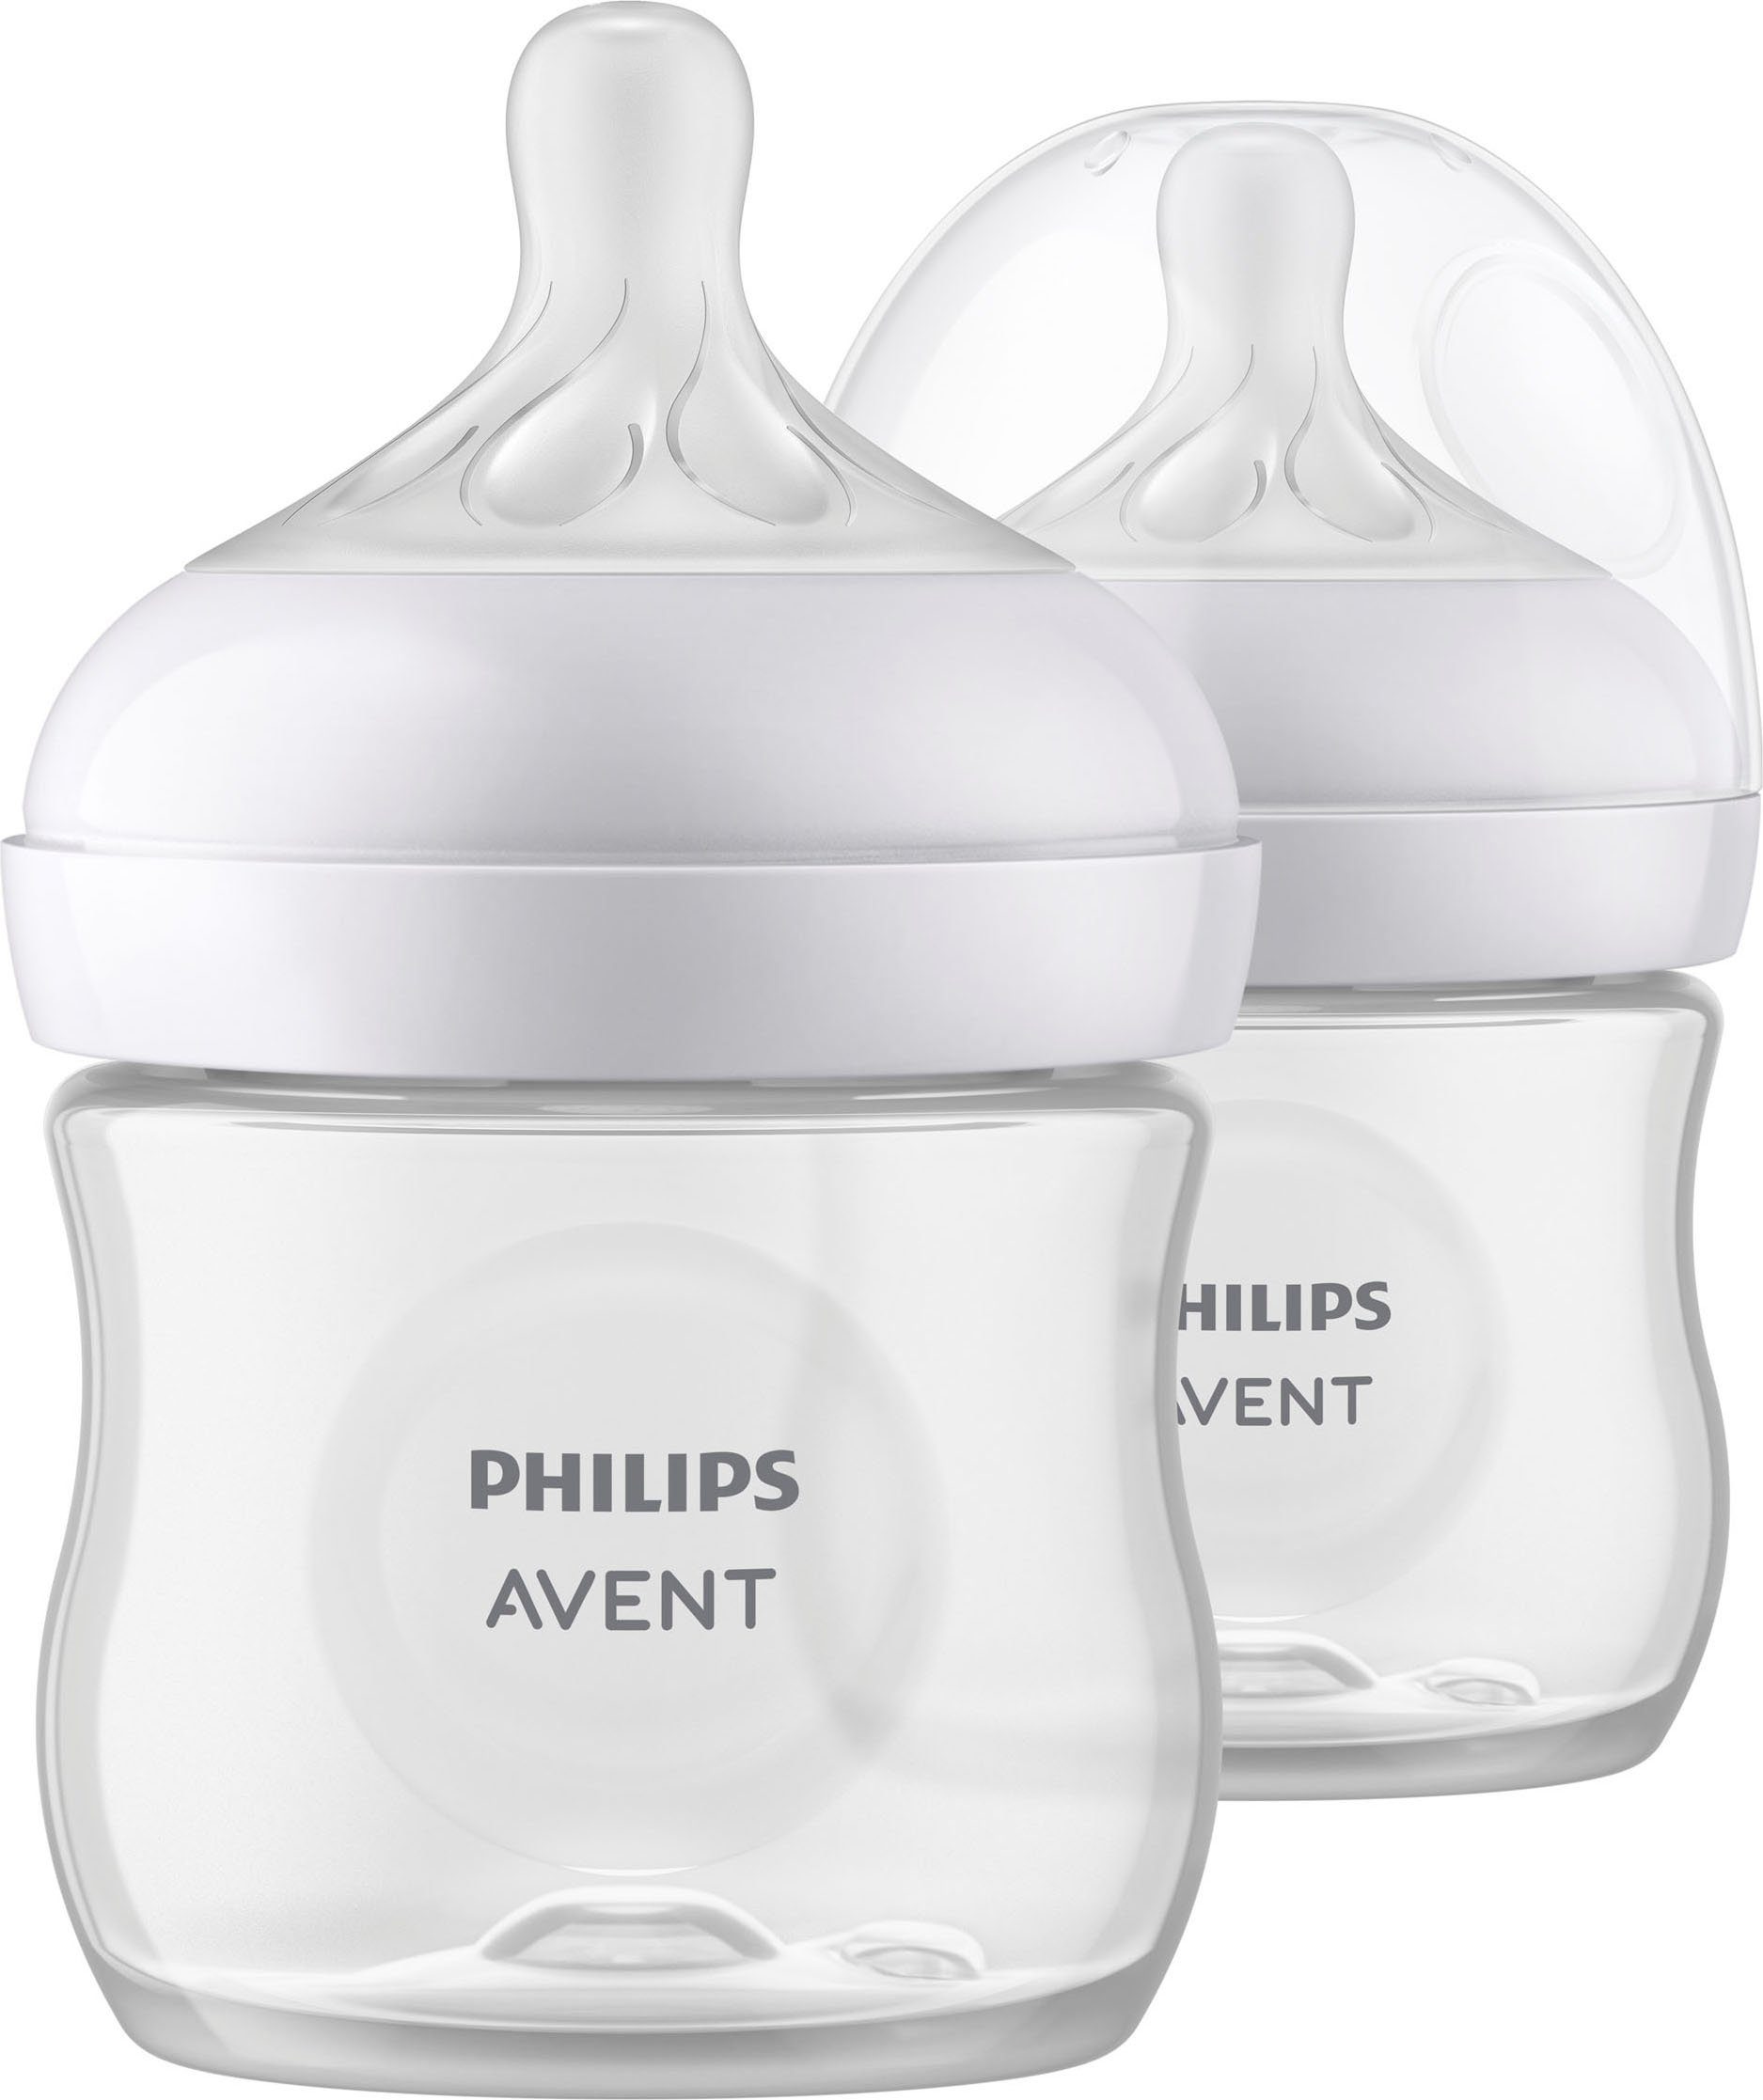 AVENT SCY900/02, Philips ab Monaten Response 0 ml, Babyflasche 125 Natural 2 Stück,